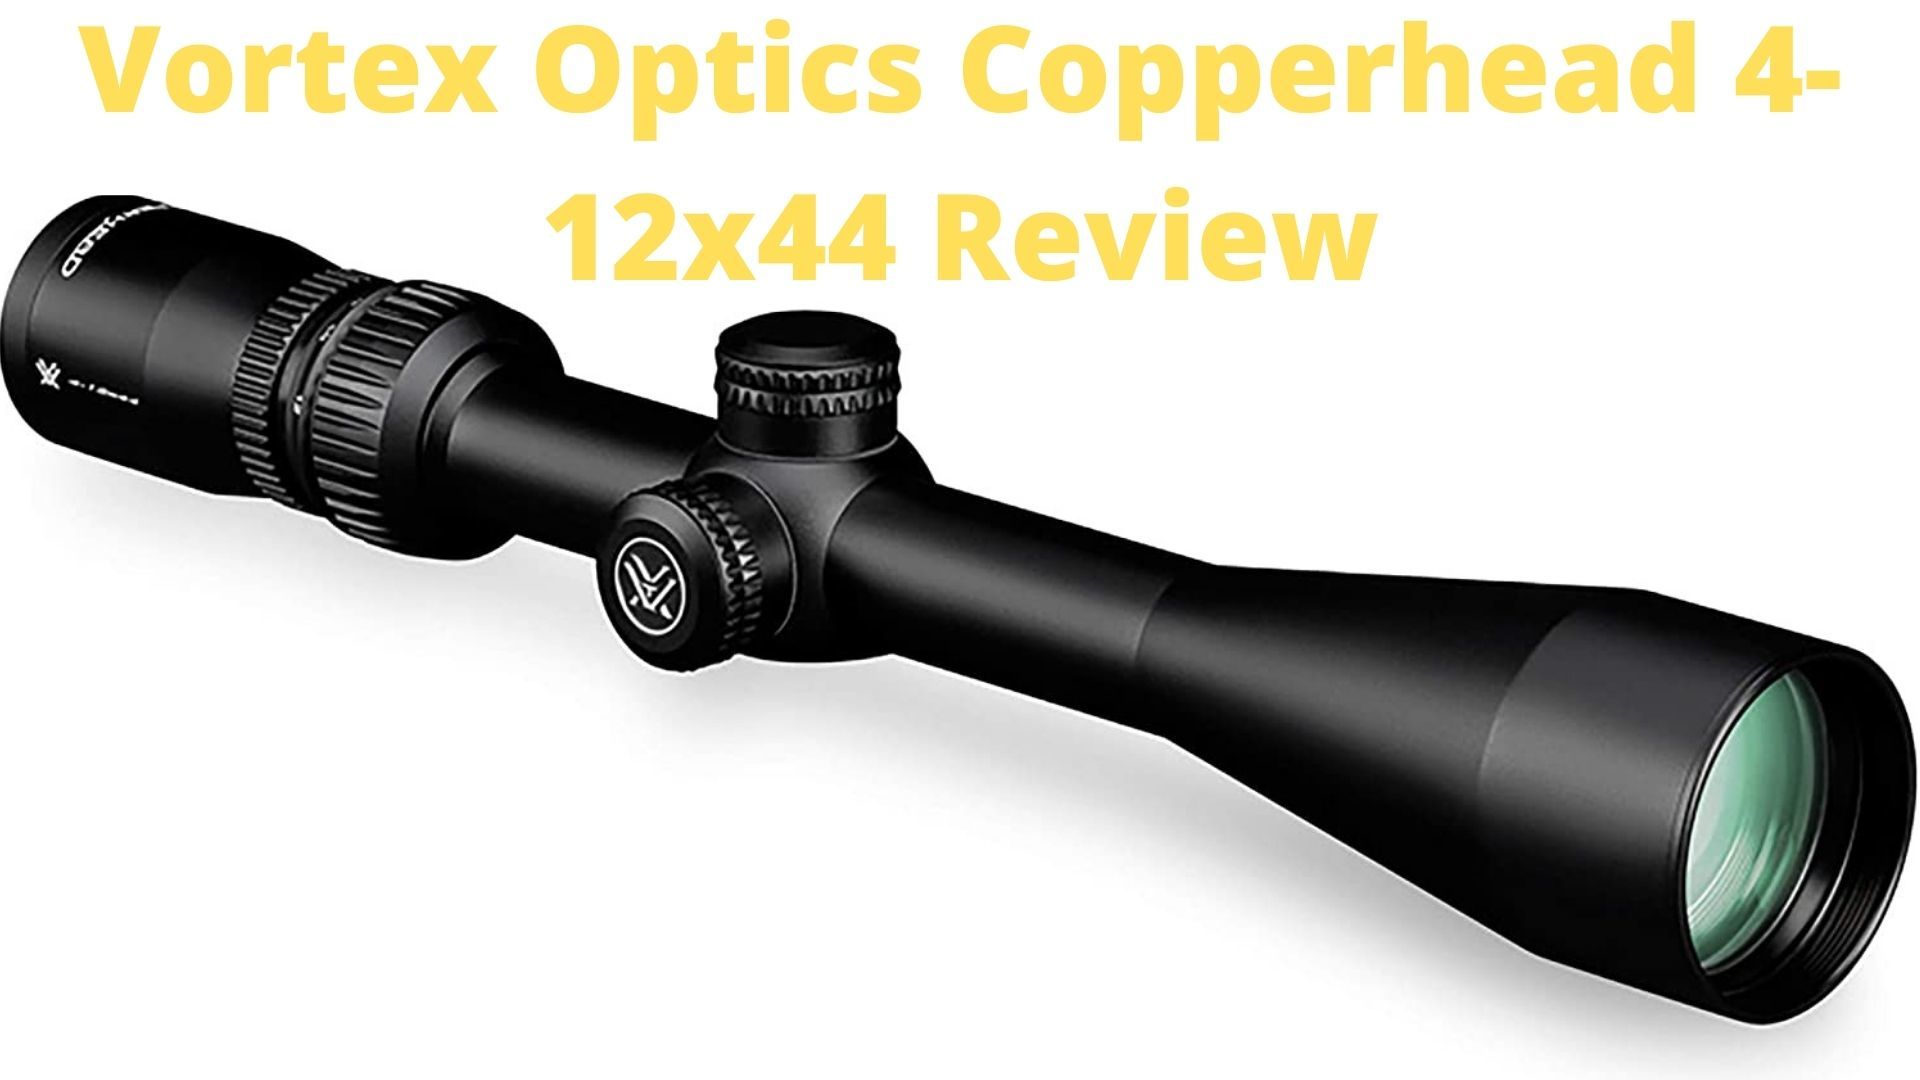 Vortex Optics Copperhead 4-12x44 Review.jpg